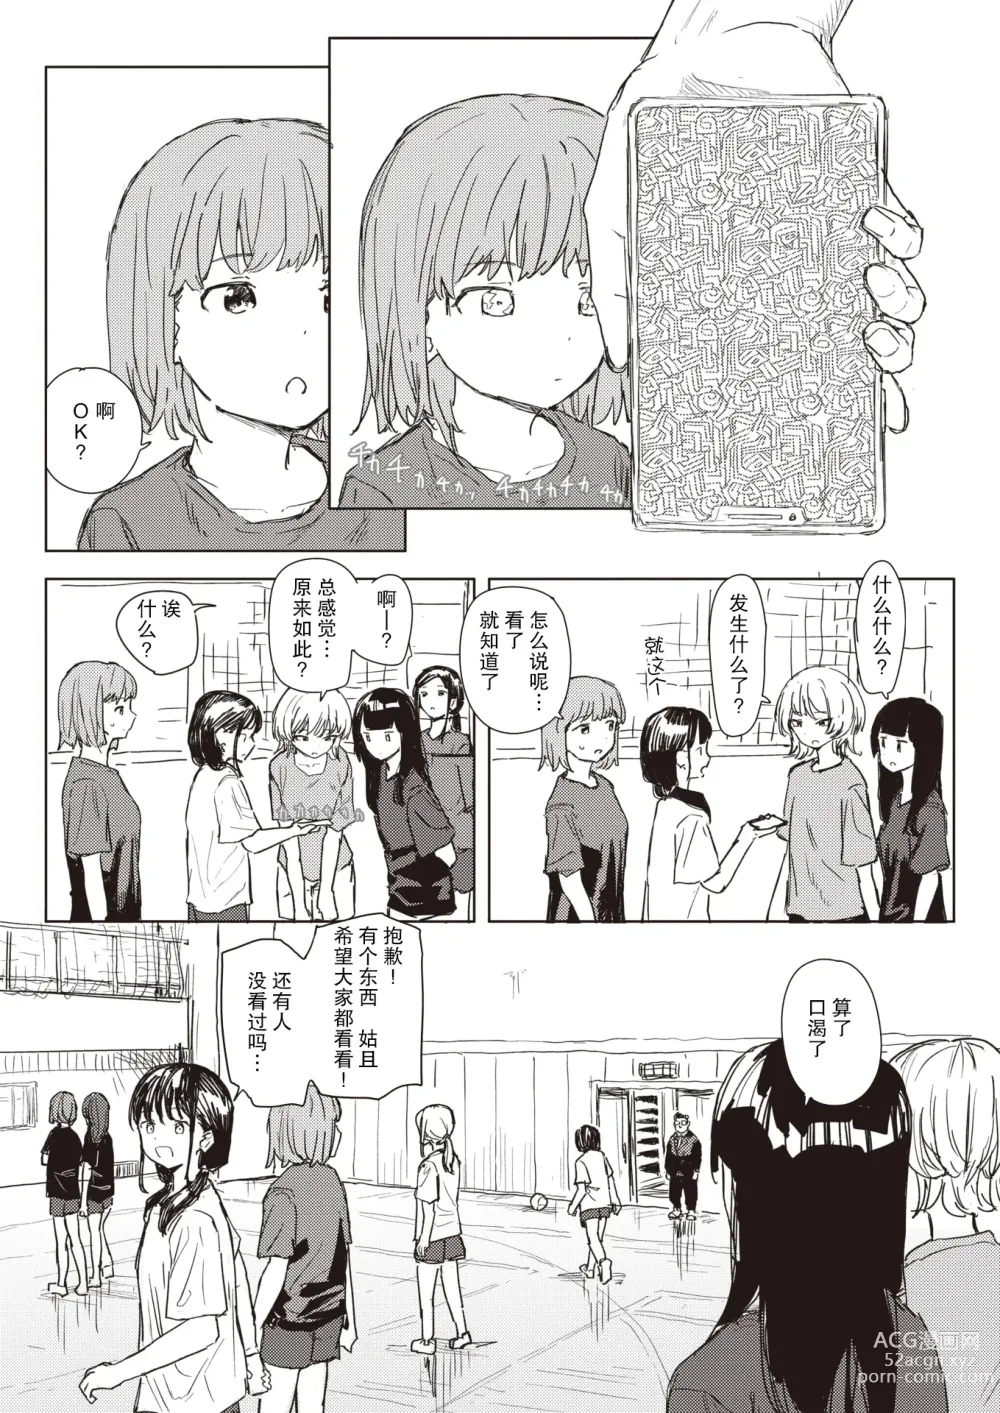 Page 9 of manga Unhappy Birthday